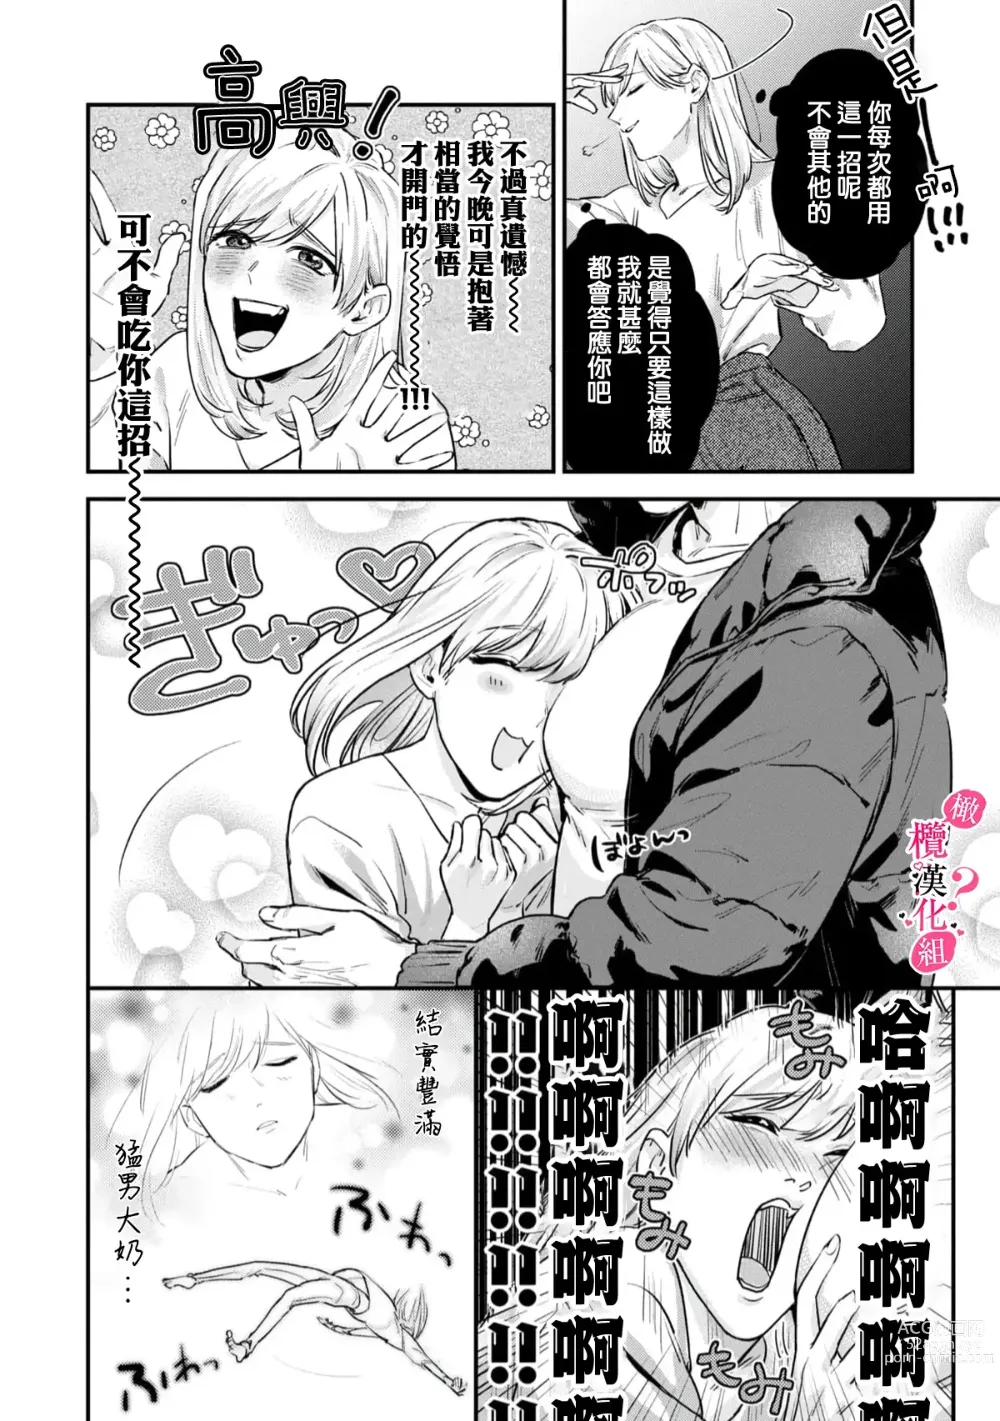 Page 6 of manga 你喜欢我的胸对吧? 01-06